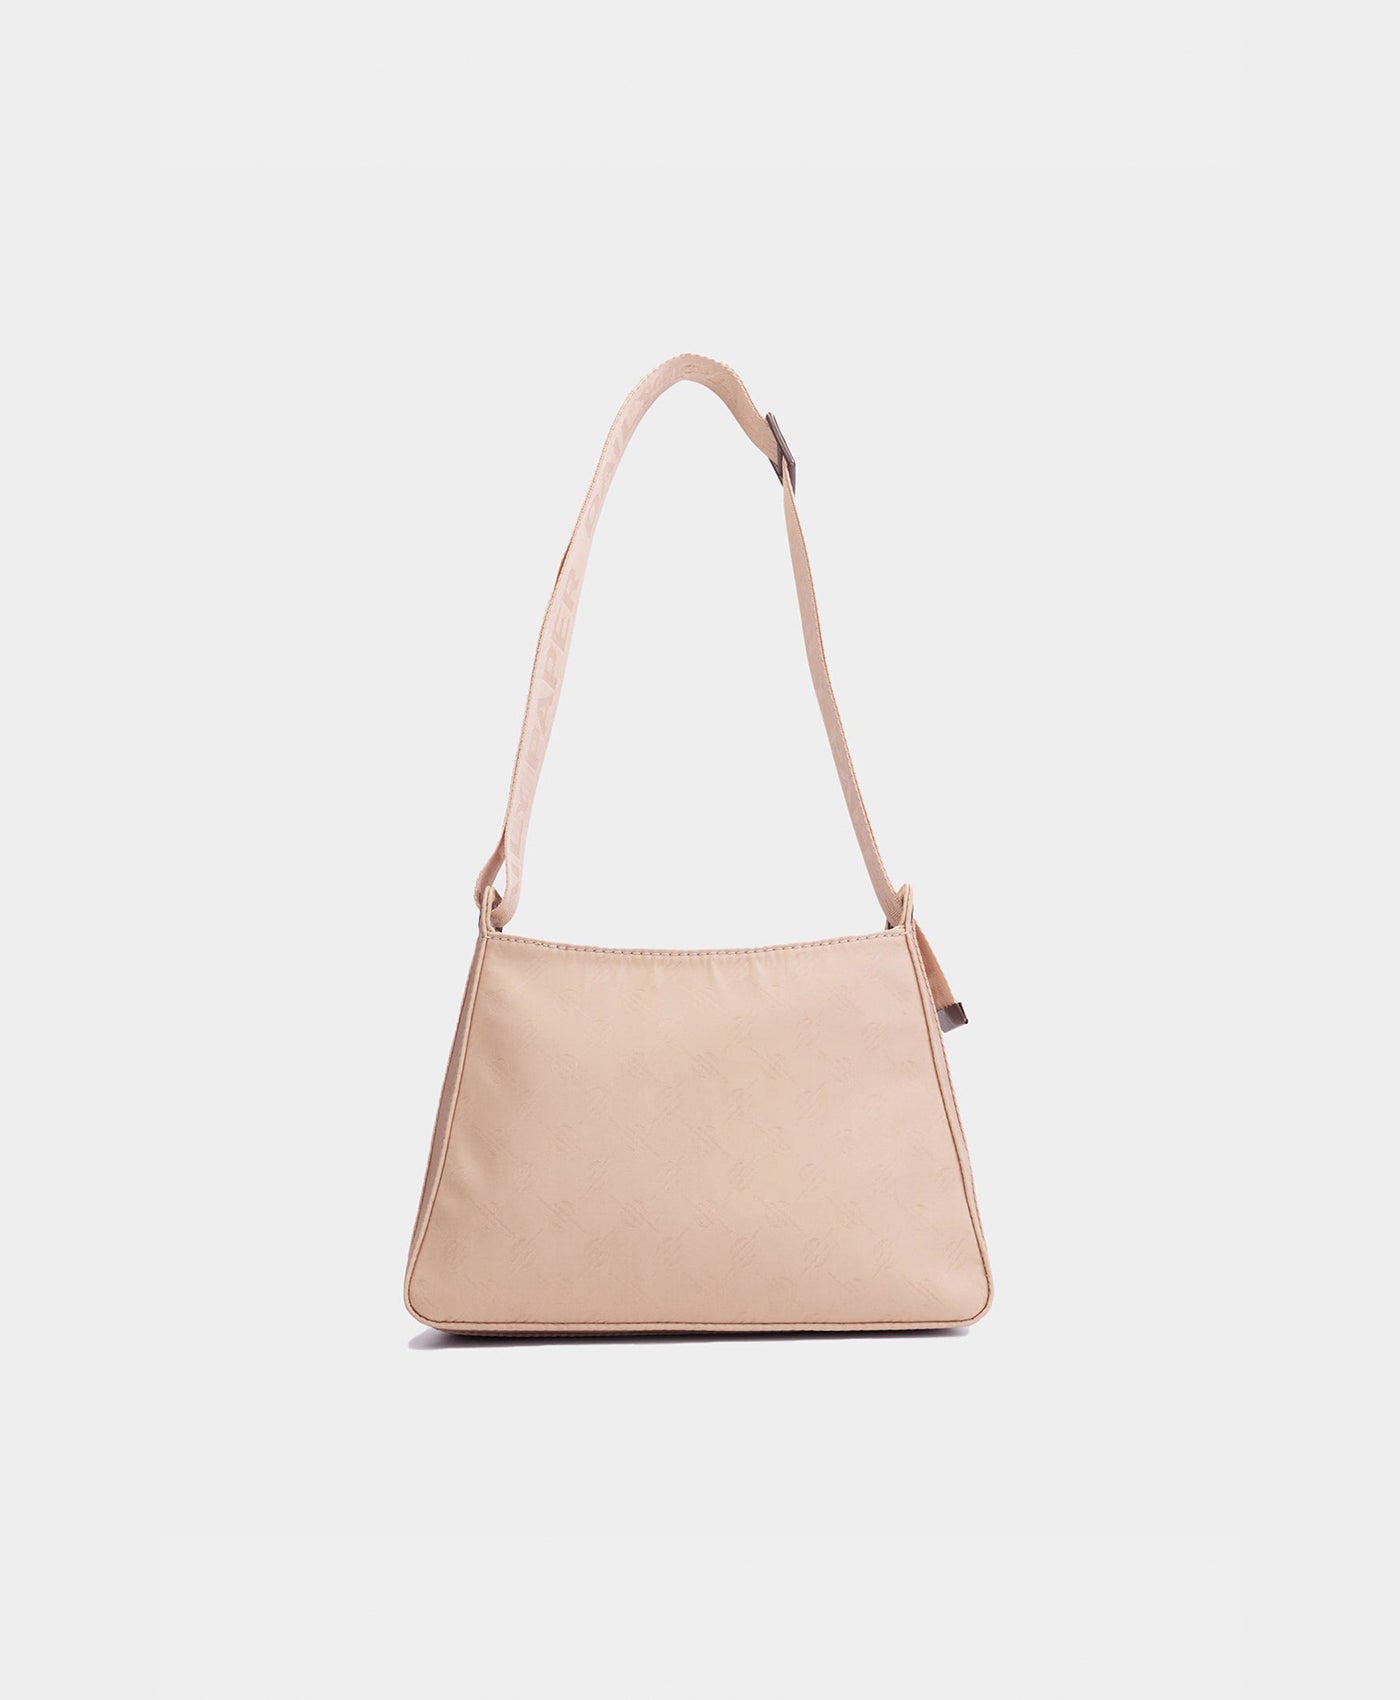 DP - Rosé Monogram Mestra Bag - Packshot - Rear